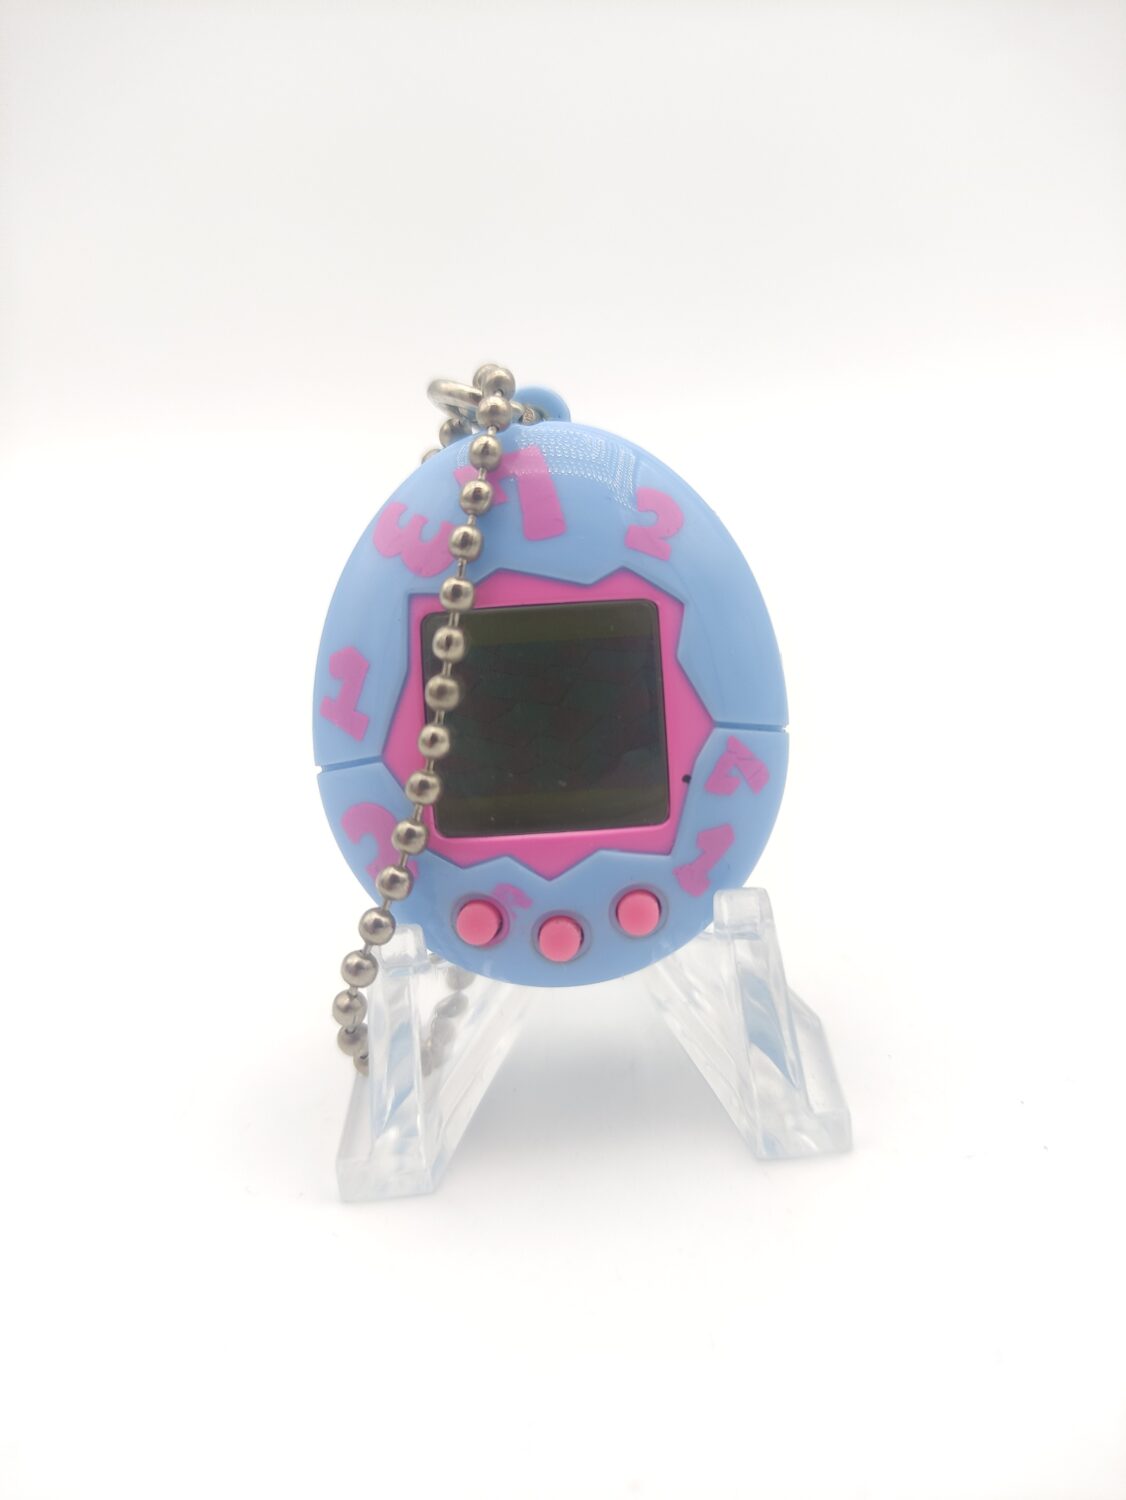 Tamagotchi Bandai Original Chibi Mini Blue w/ pink Boutique-Tamagotchis 2